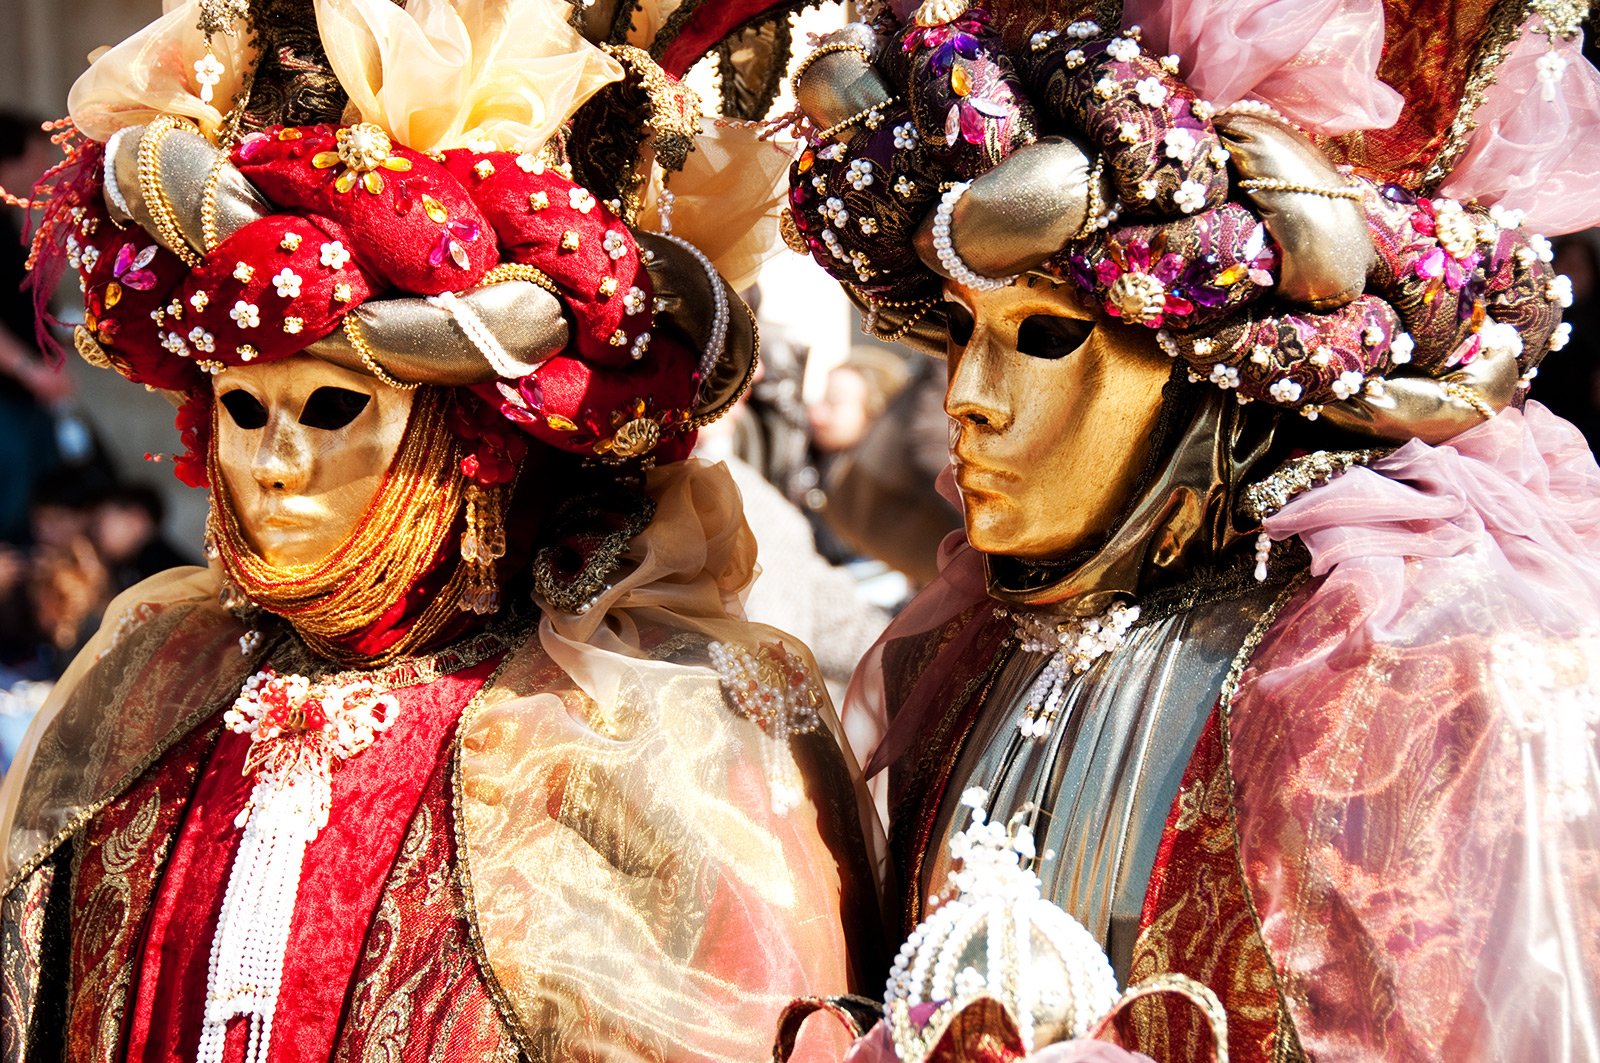 How to take part in Venice Carnival in Venice